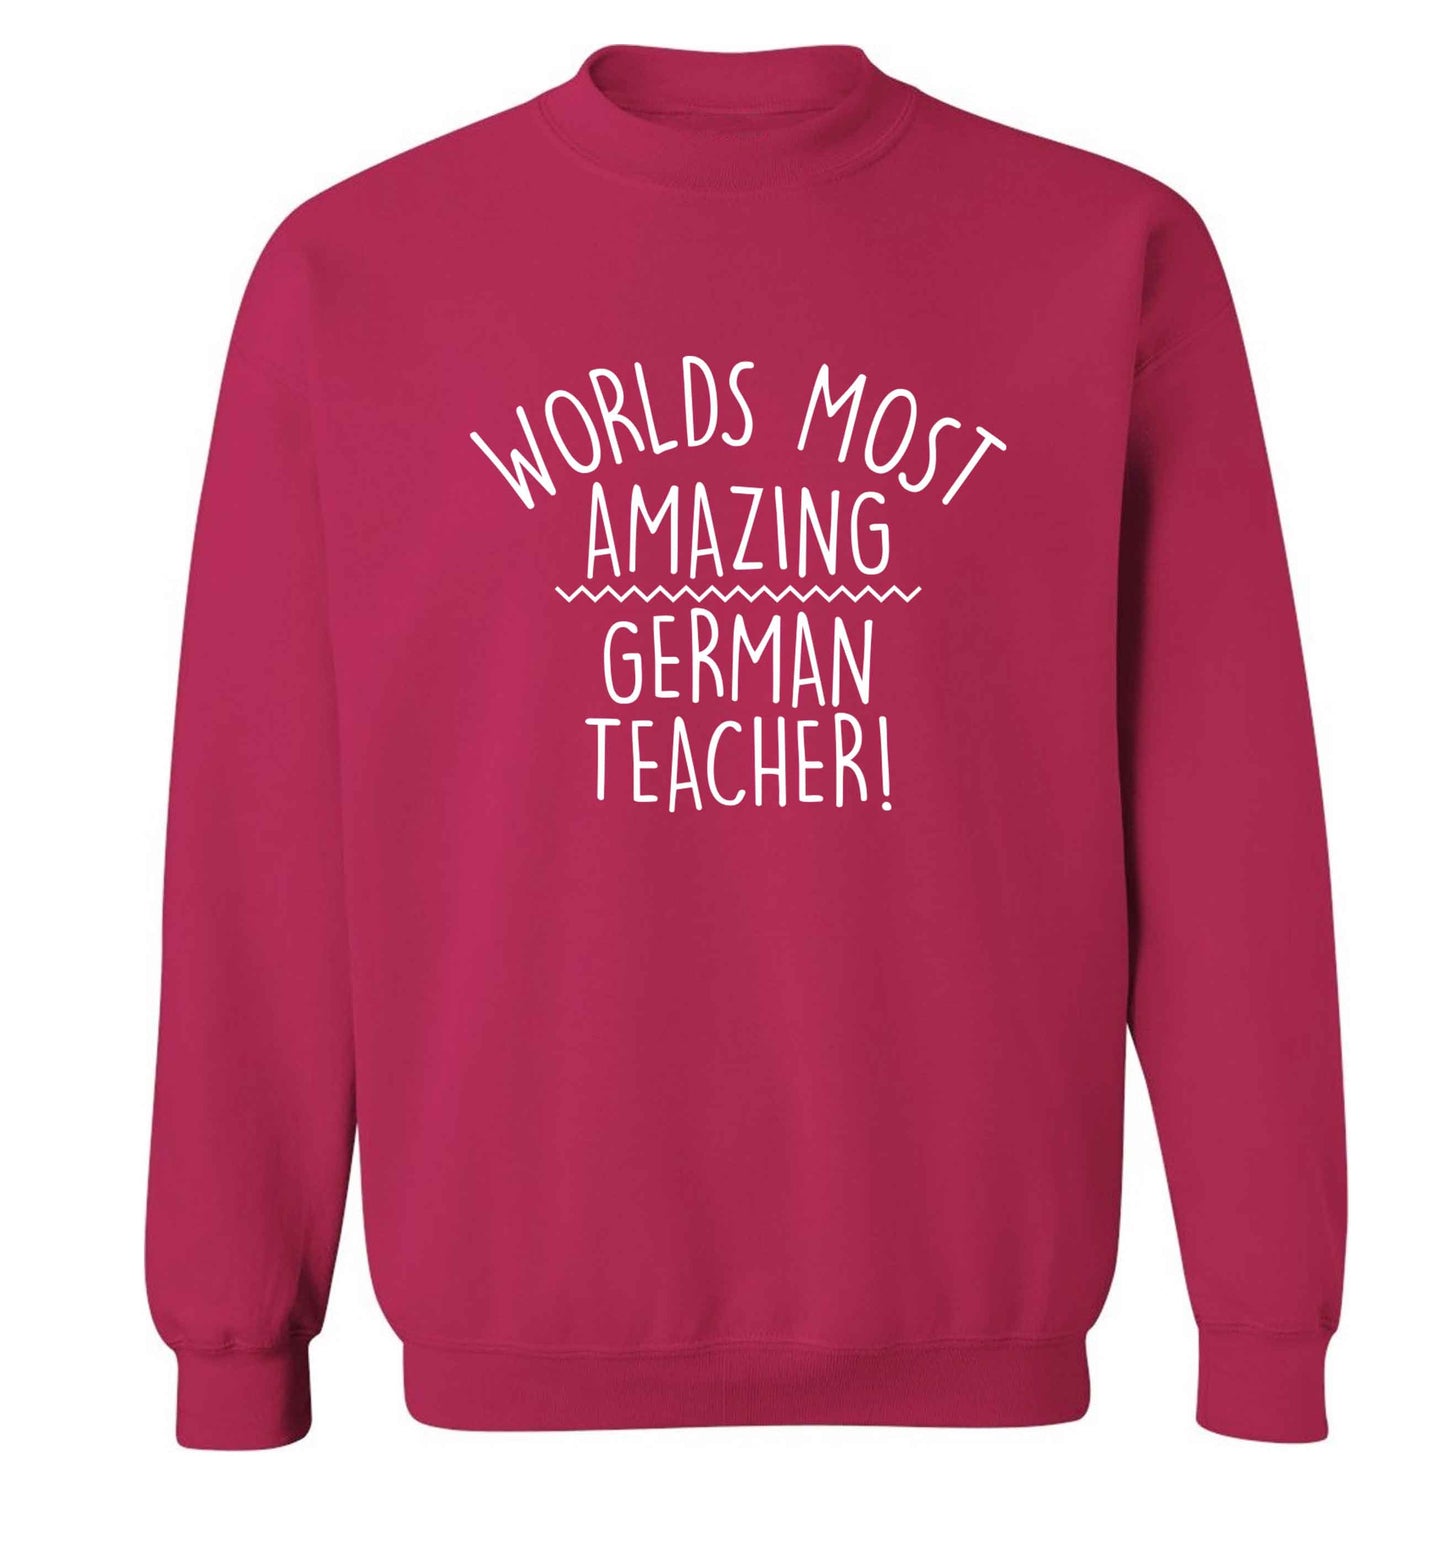 Worlds most amazing German teacher adult's unisex pink sweater 2XL